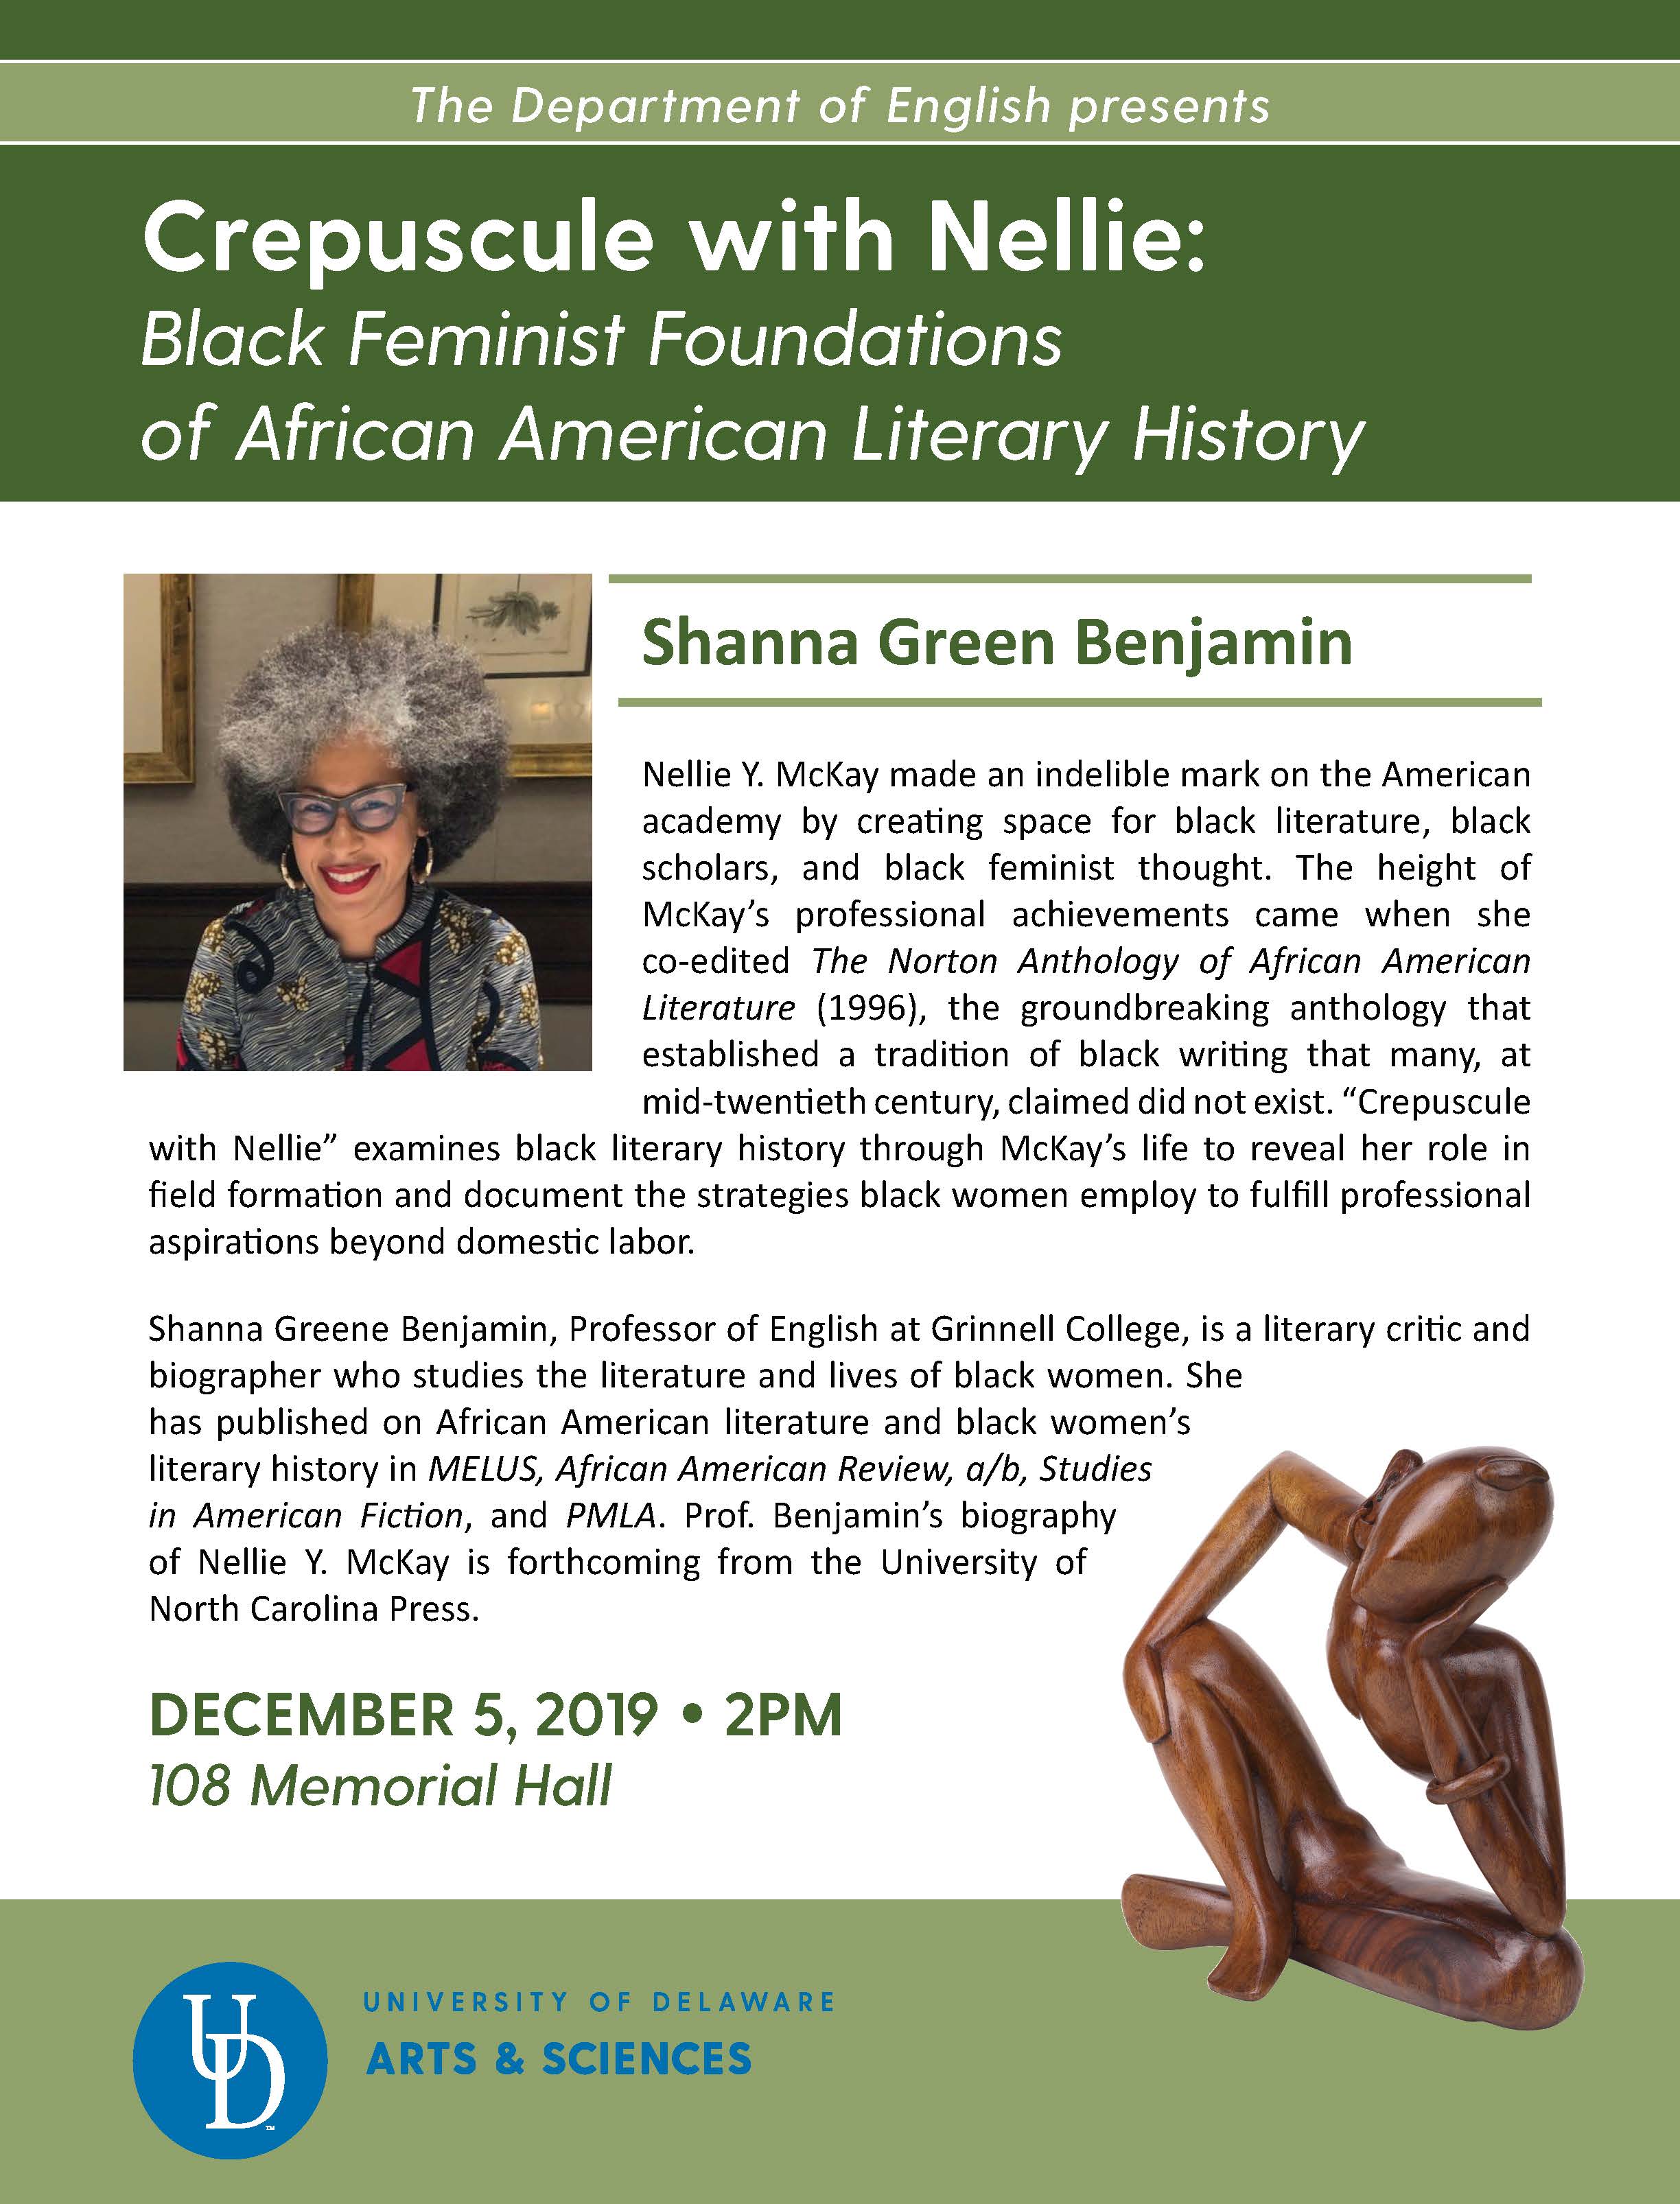 Shanna Benjamin will speak at the University of Delaware December 5, 2019